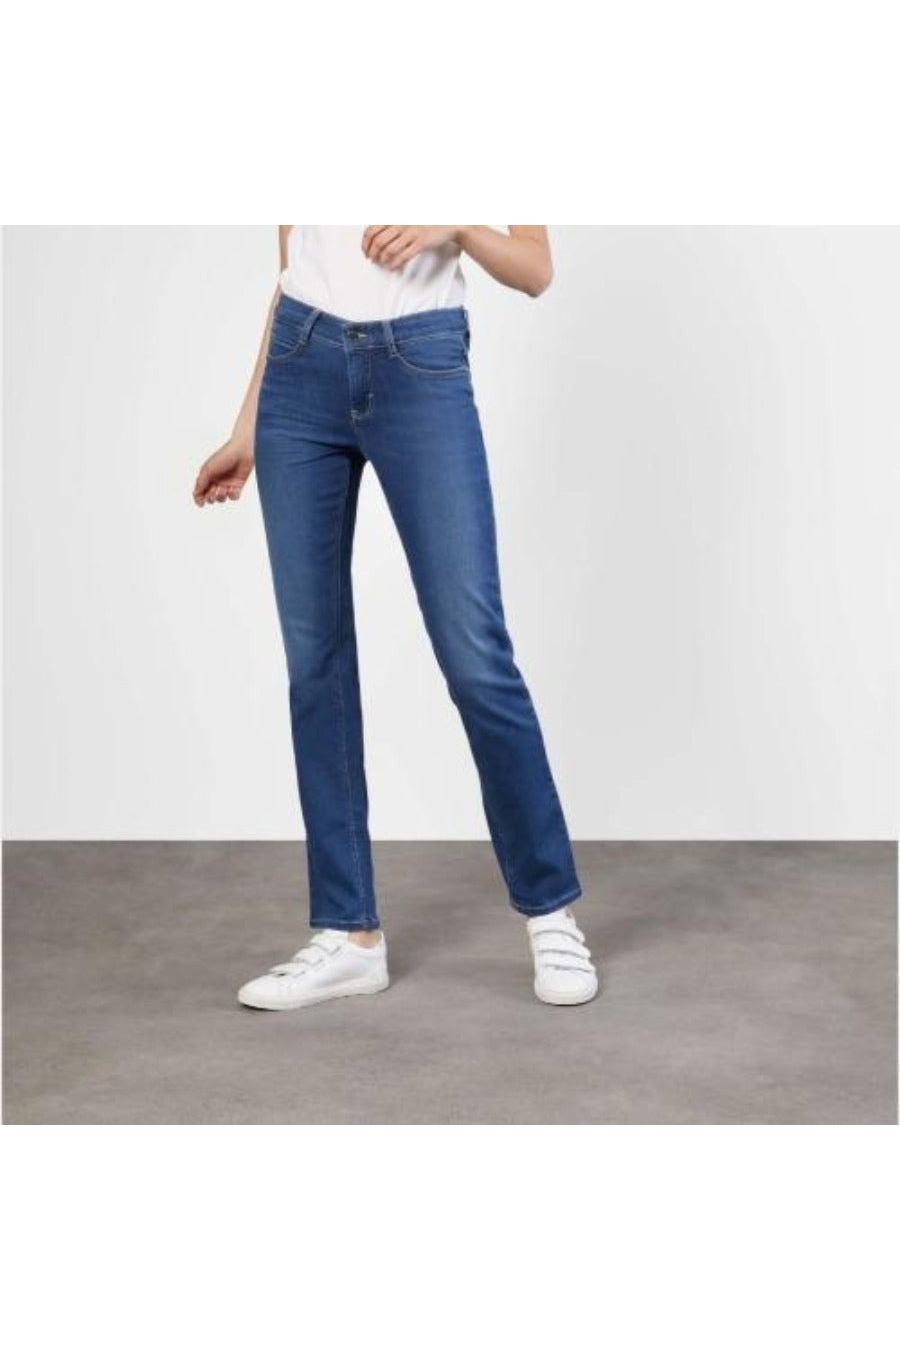 lepel jukbeen gekruld Mac Jeans Dream Denim 5401-90-355L-D569 | Shop Premium Denim Mac Jeans –  Robertson Madison